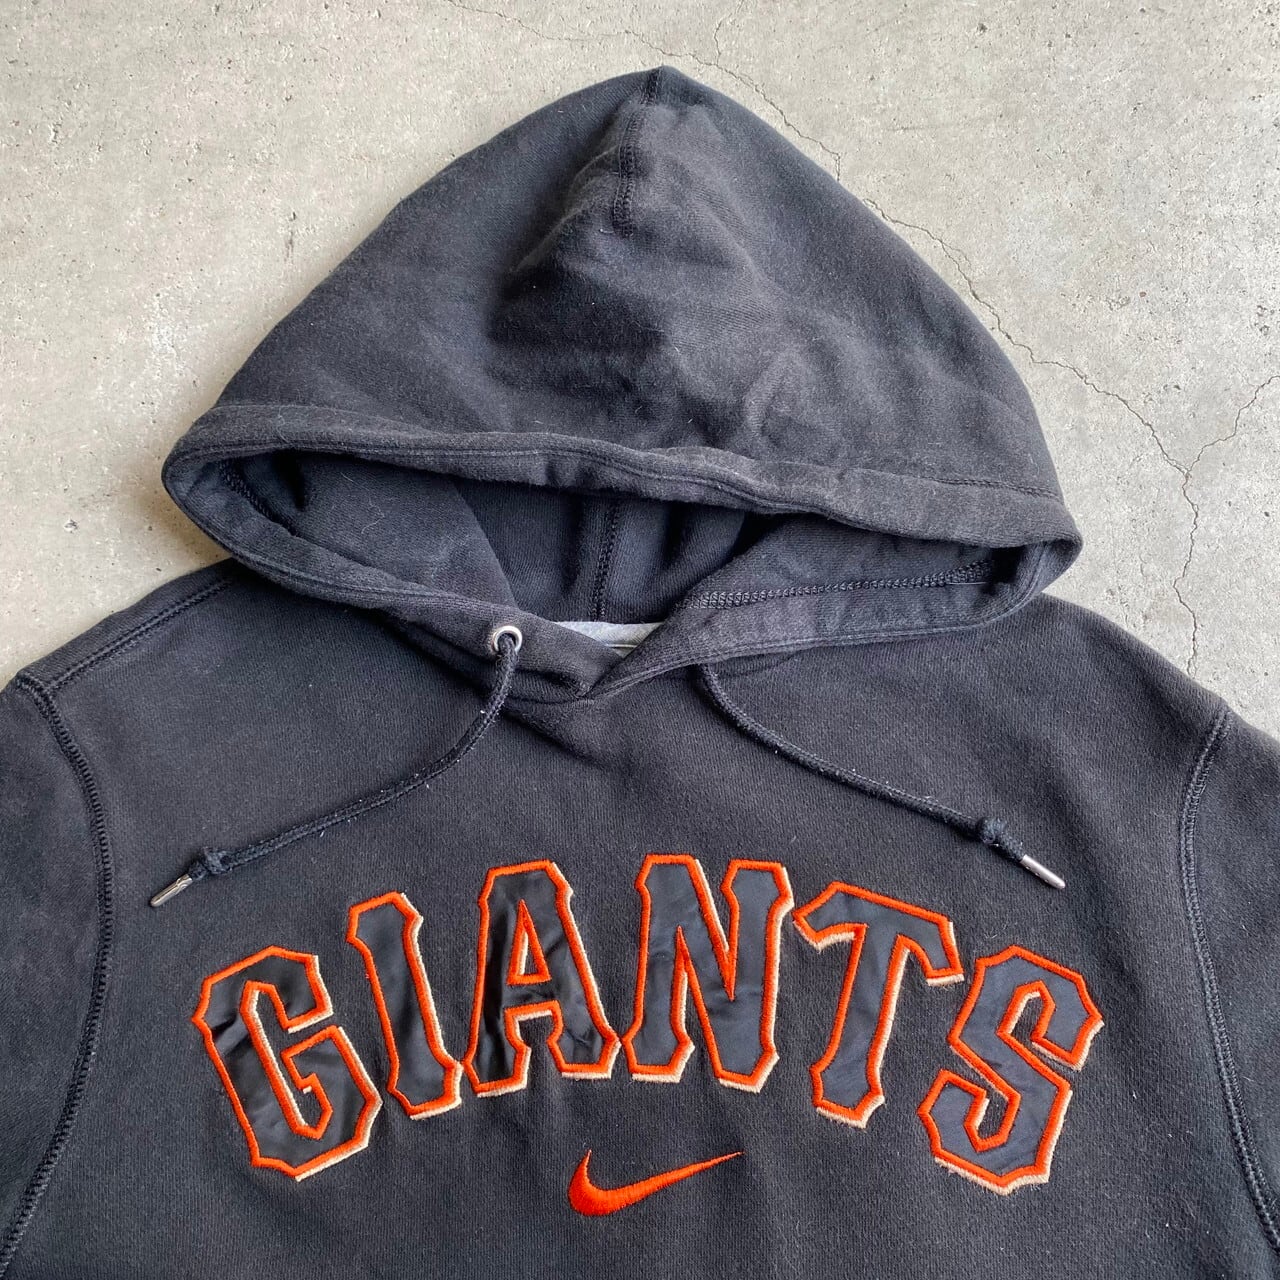 【XL相当】San Francisco Giants ナイロン プルオーバー